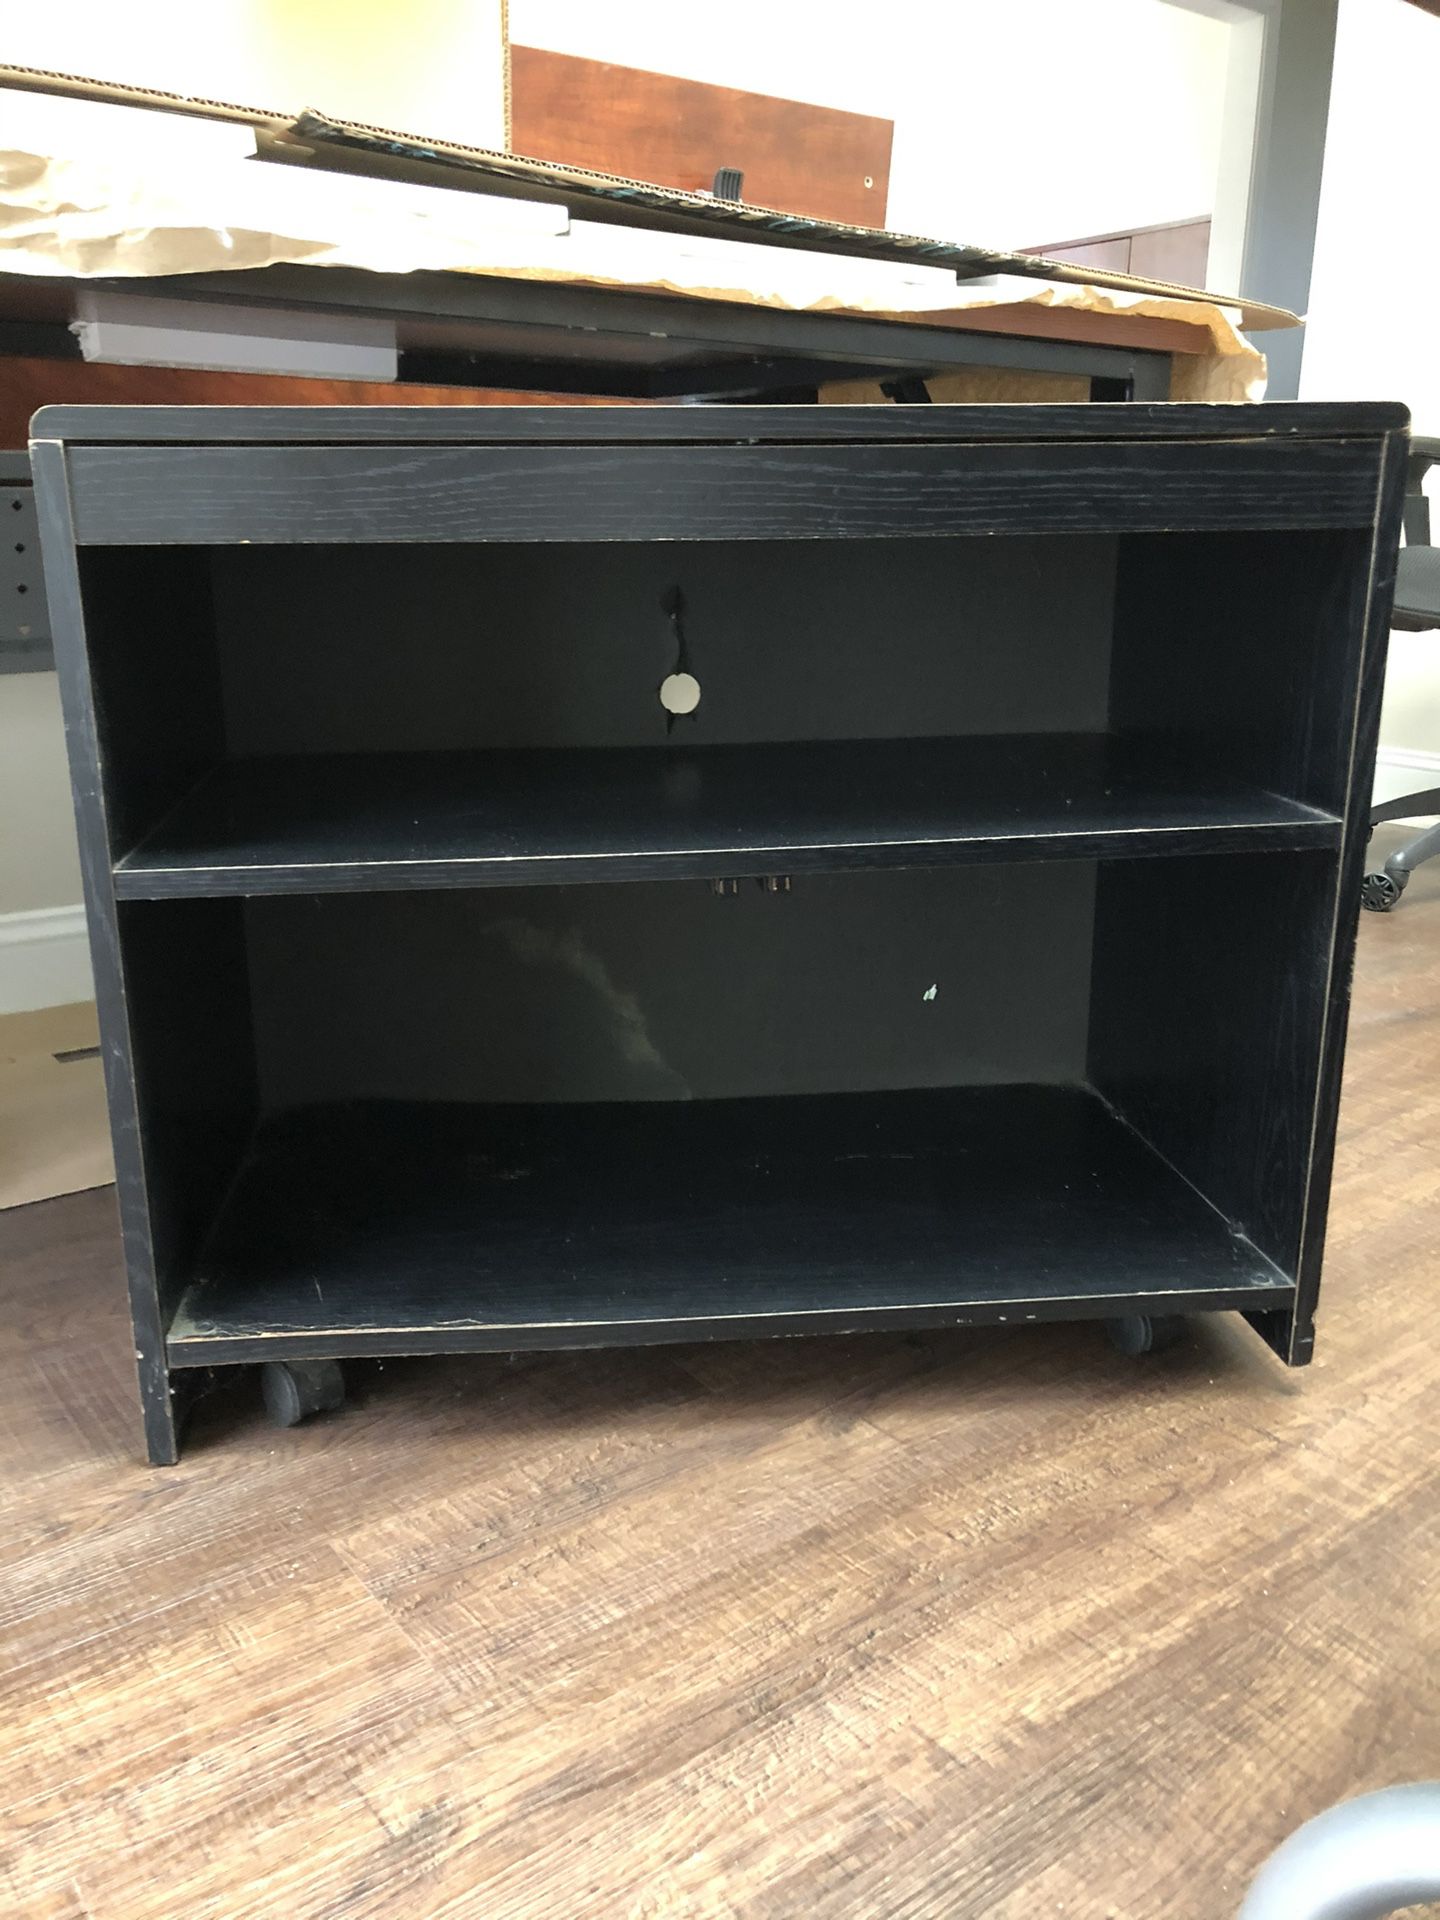 Black TV Stand Printer Cart Bookshelf 